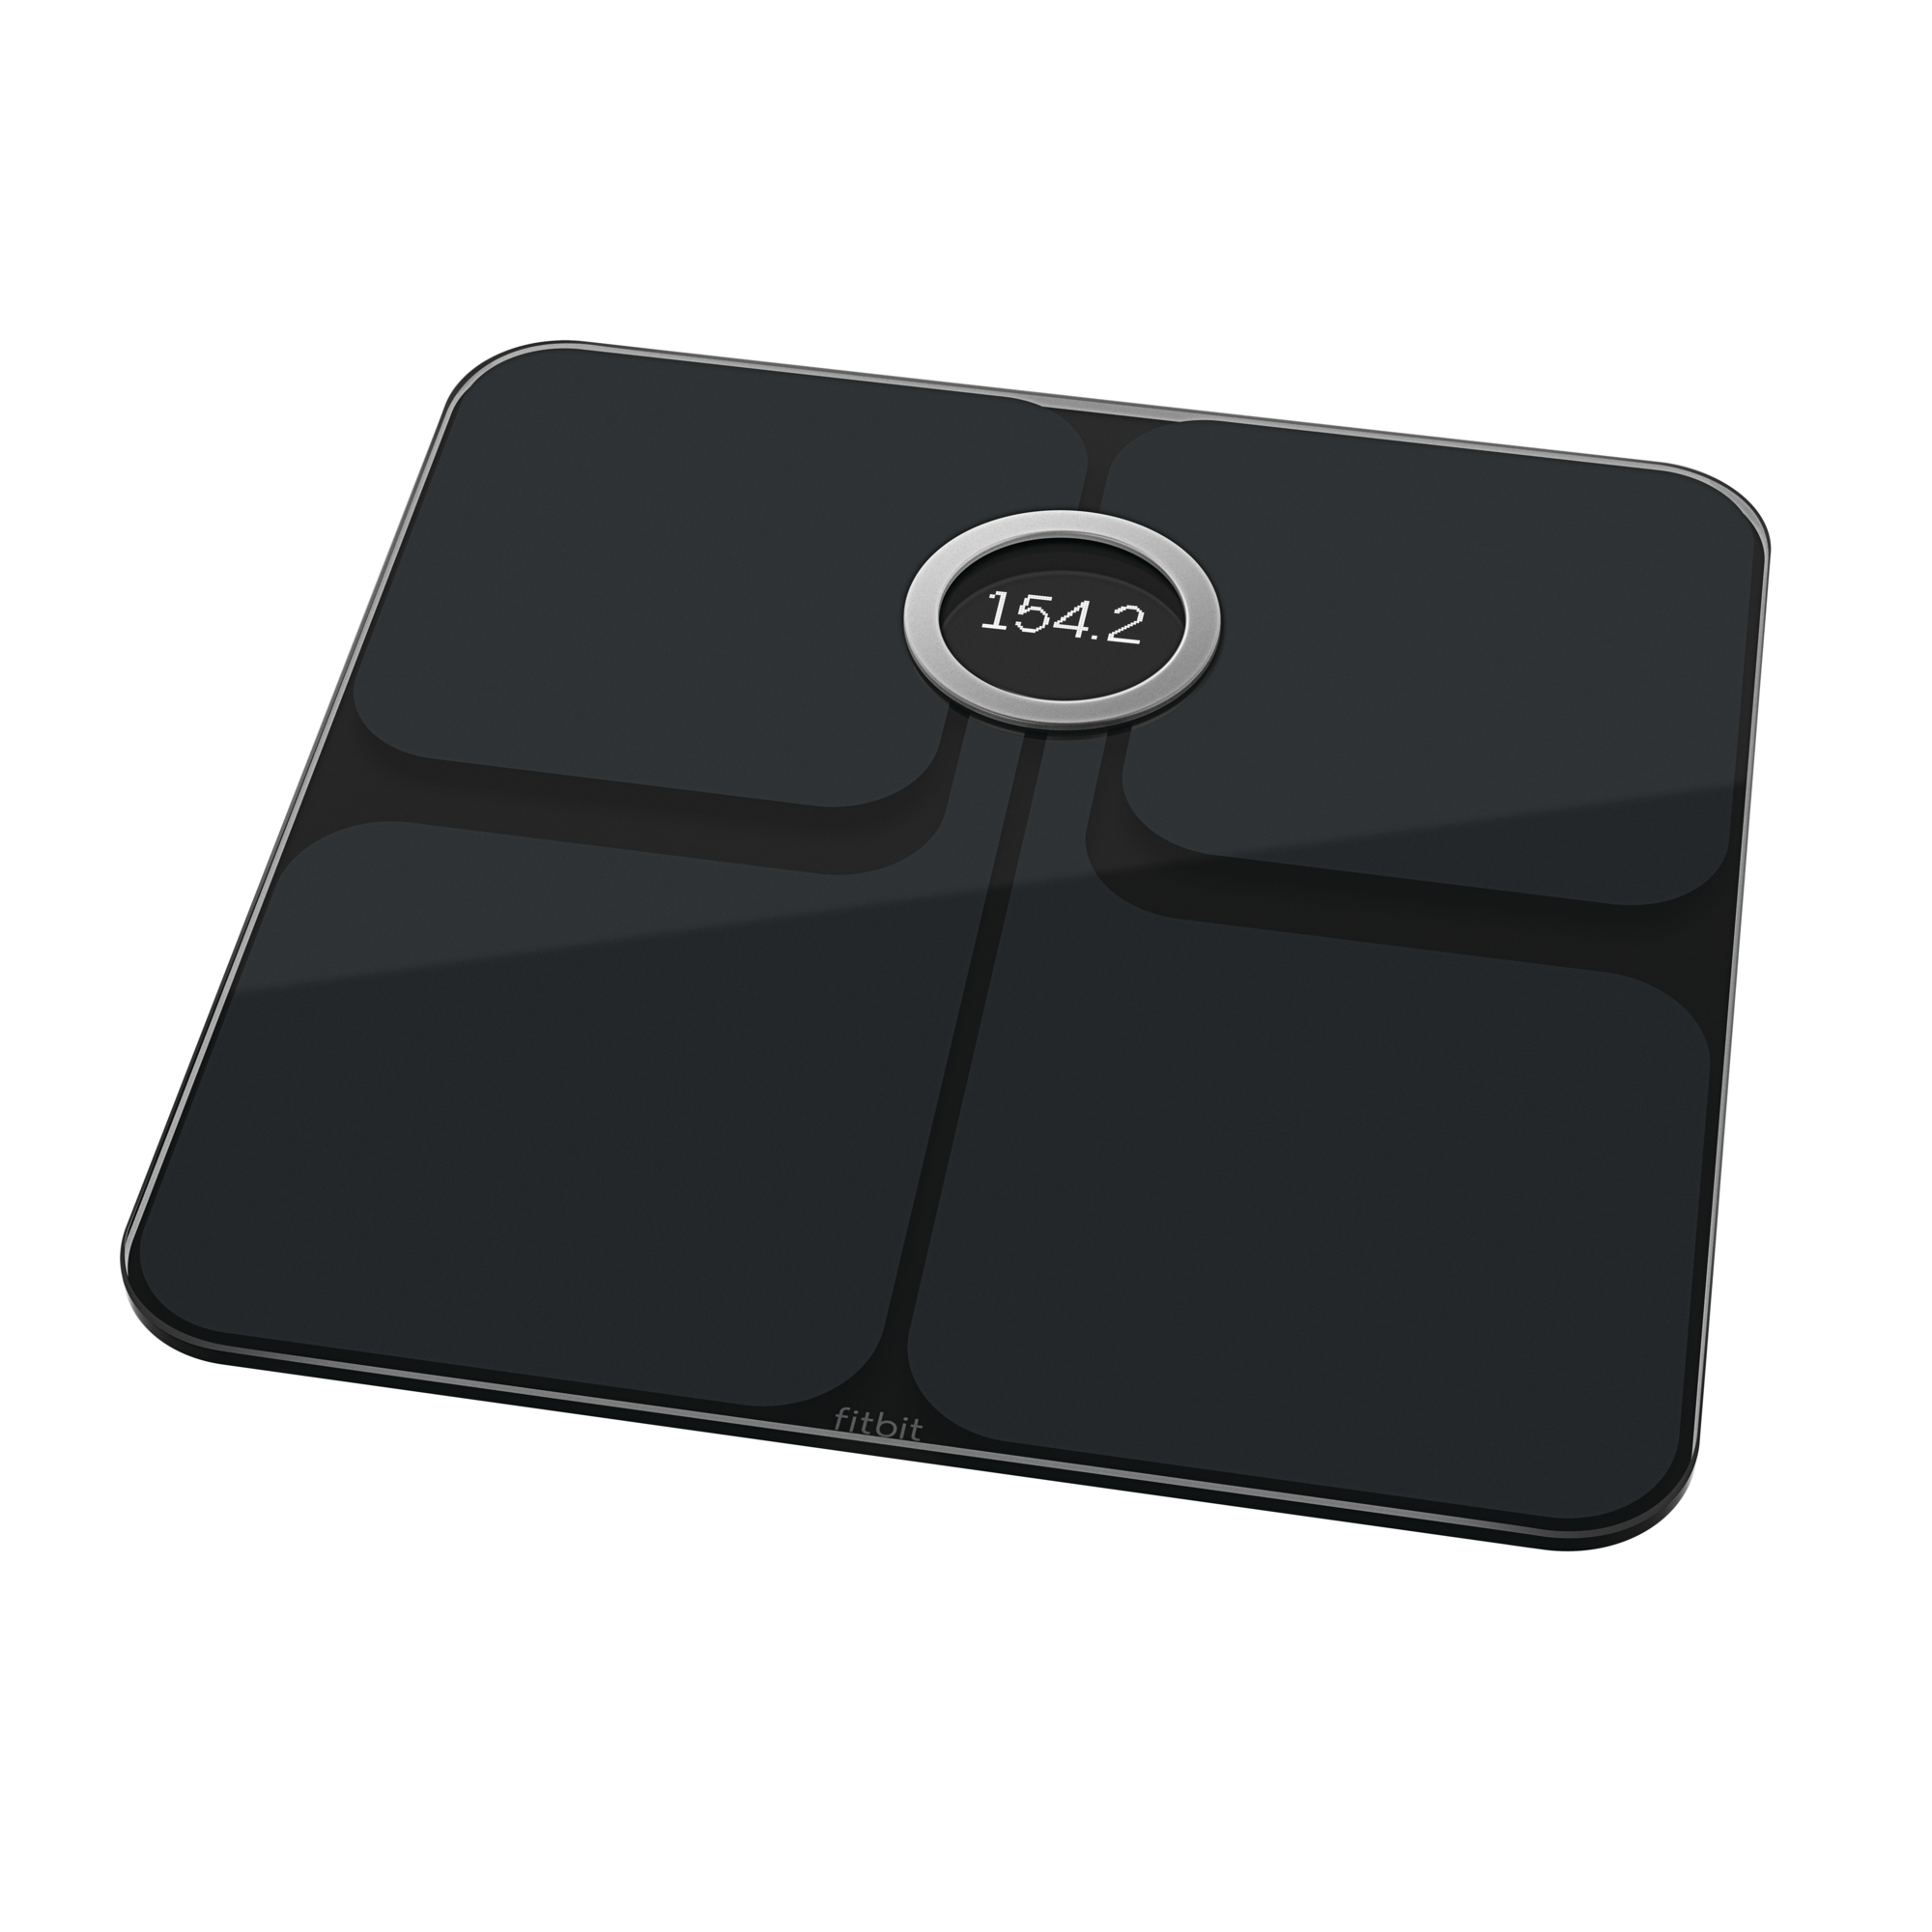 Fitbit Aria 2 Wi-Fi Smart Scale - image 2 of 3